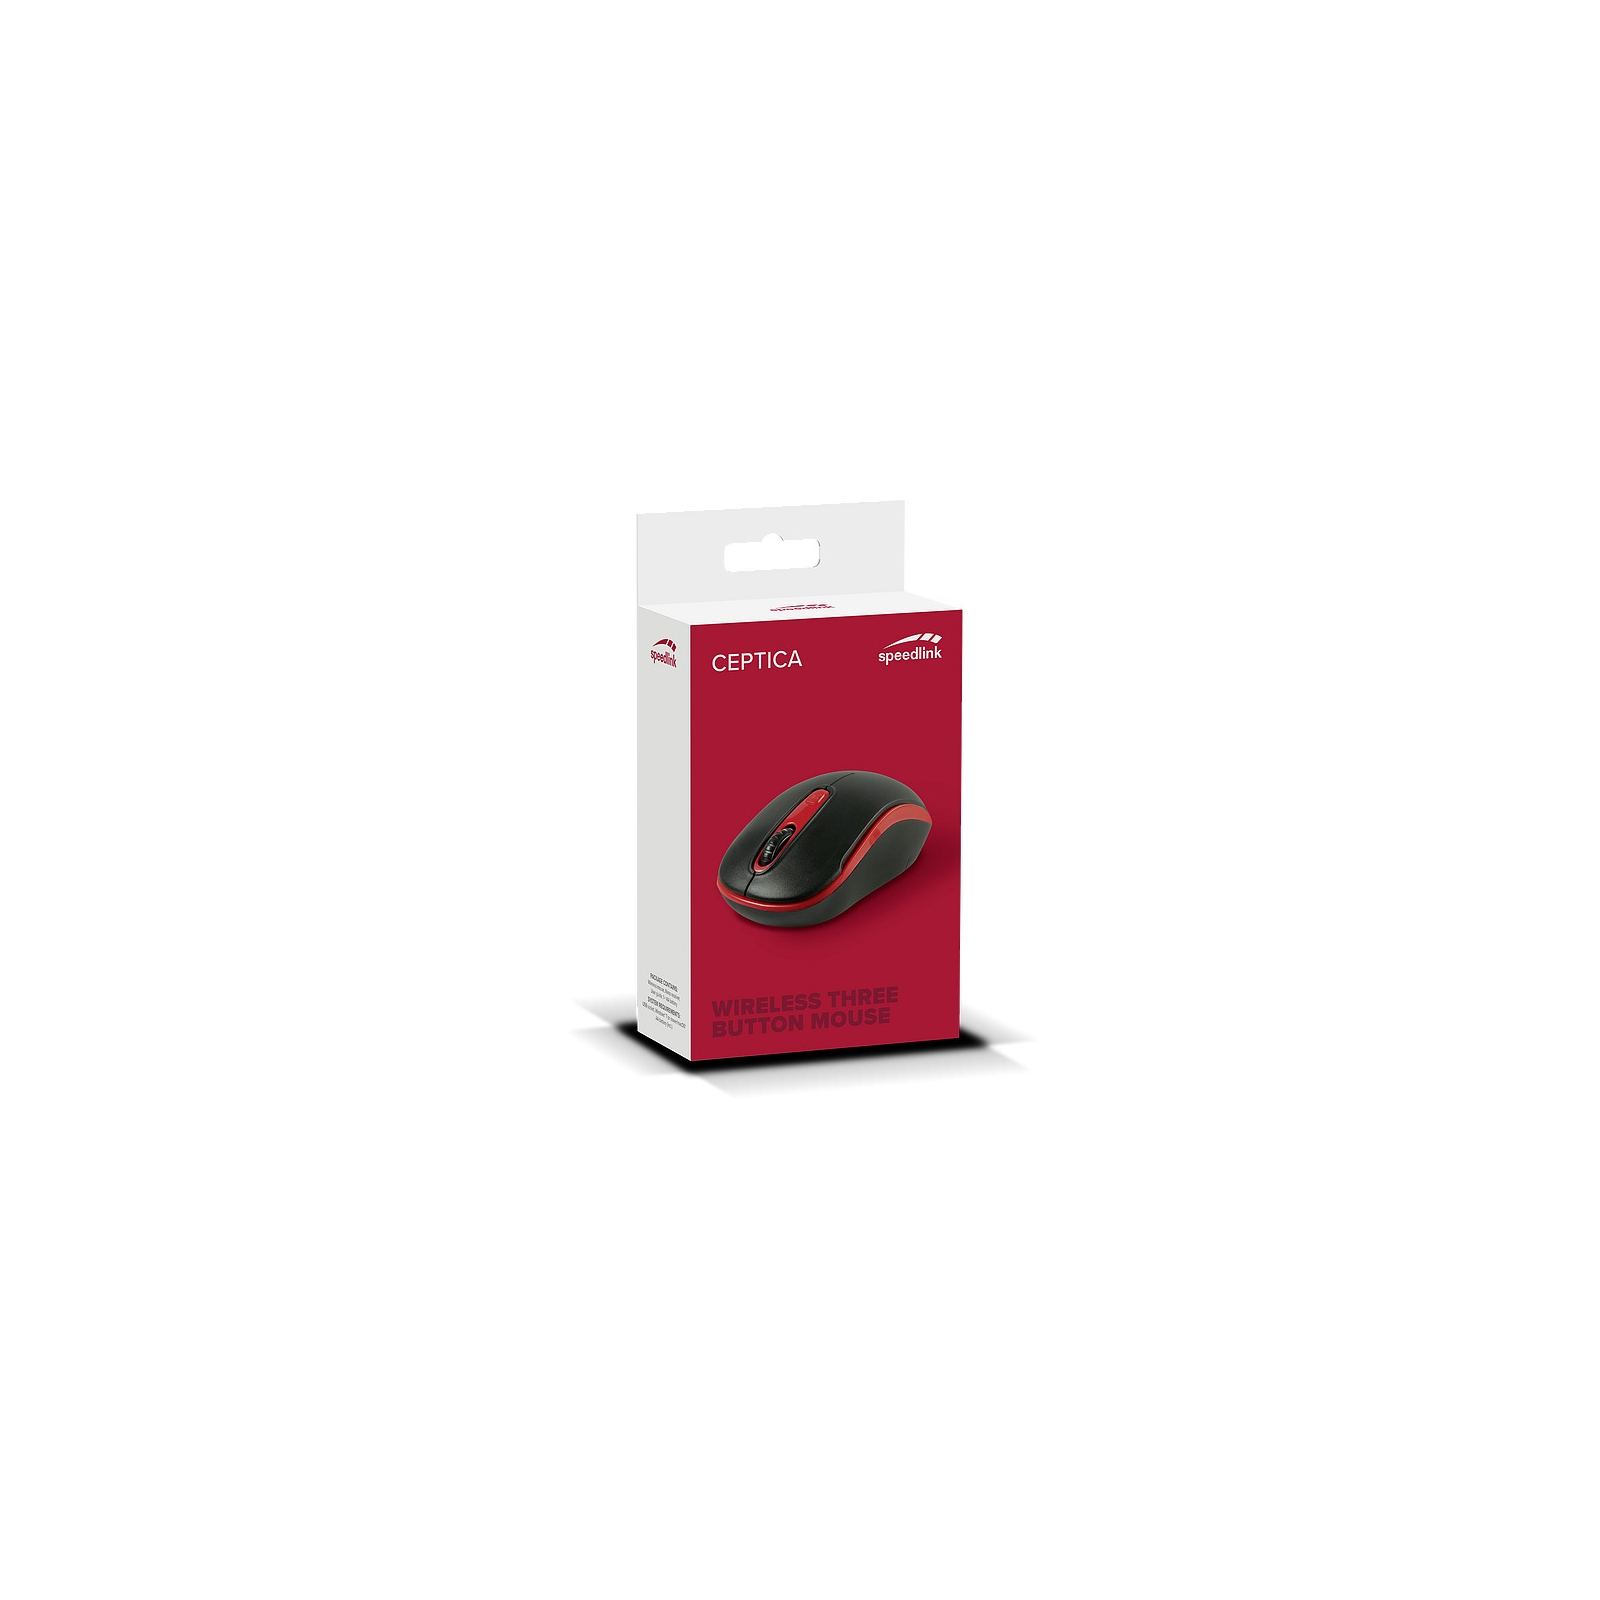 Мышка Speedlink Ceptica Wireless Black/Red (SL-630013-BKRD) изображение 3